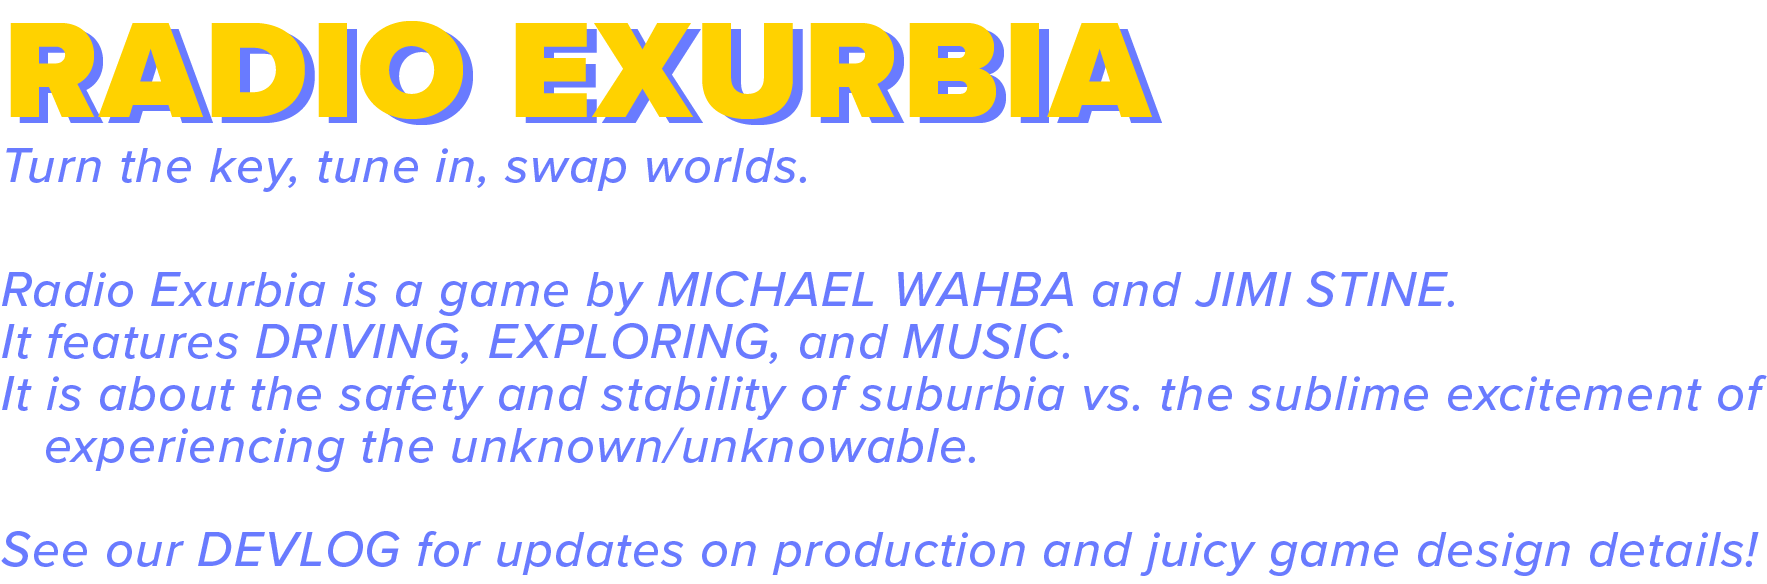 Radio Exurbia